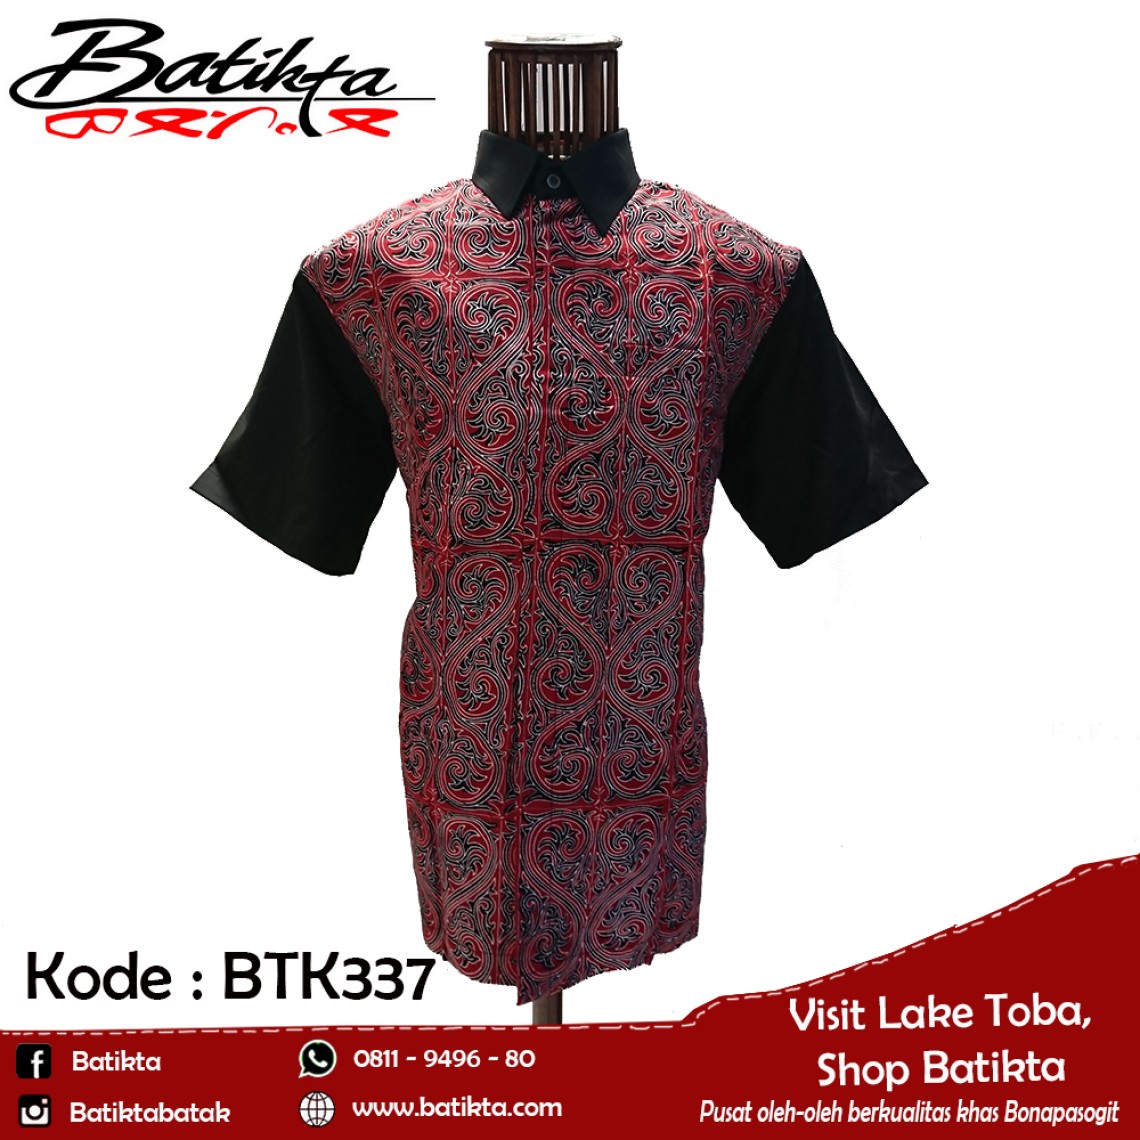 BTK337 HEM Batik Motif Gorga Warna Merah Putih Hitam profile picture